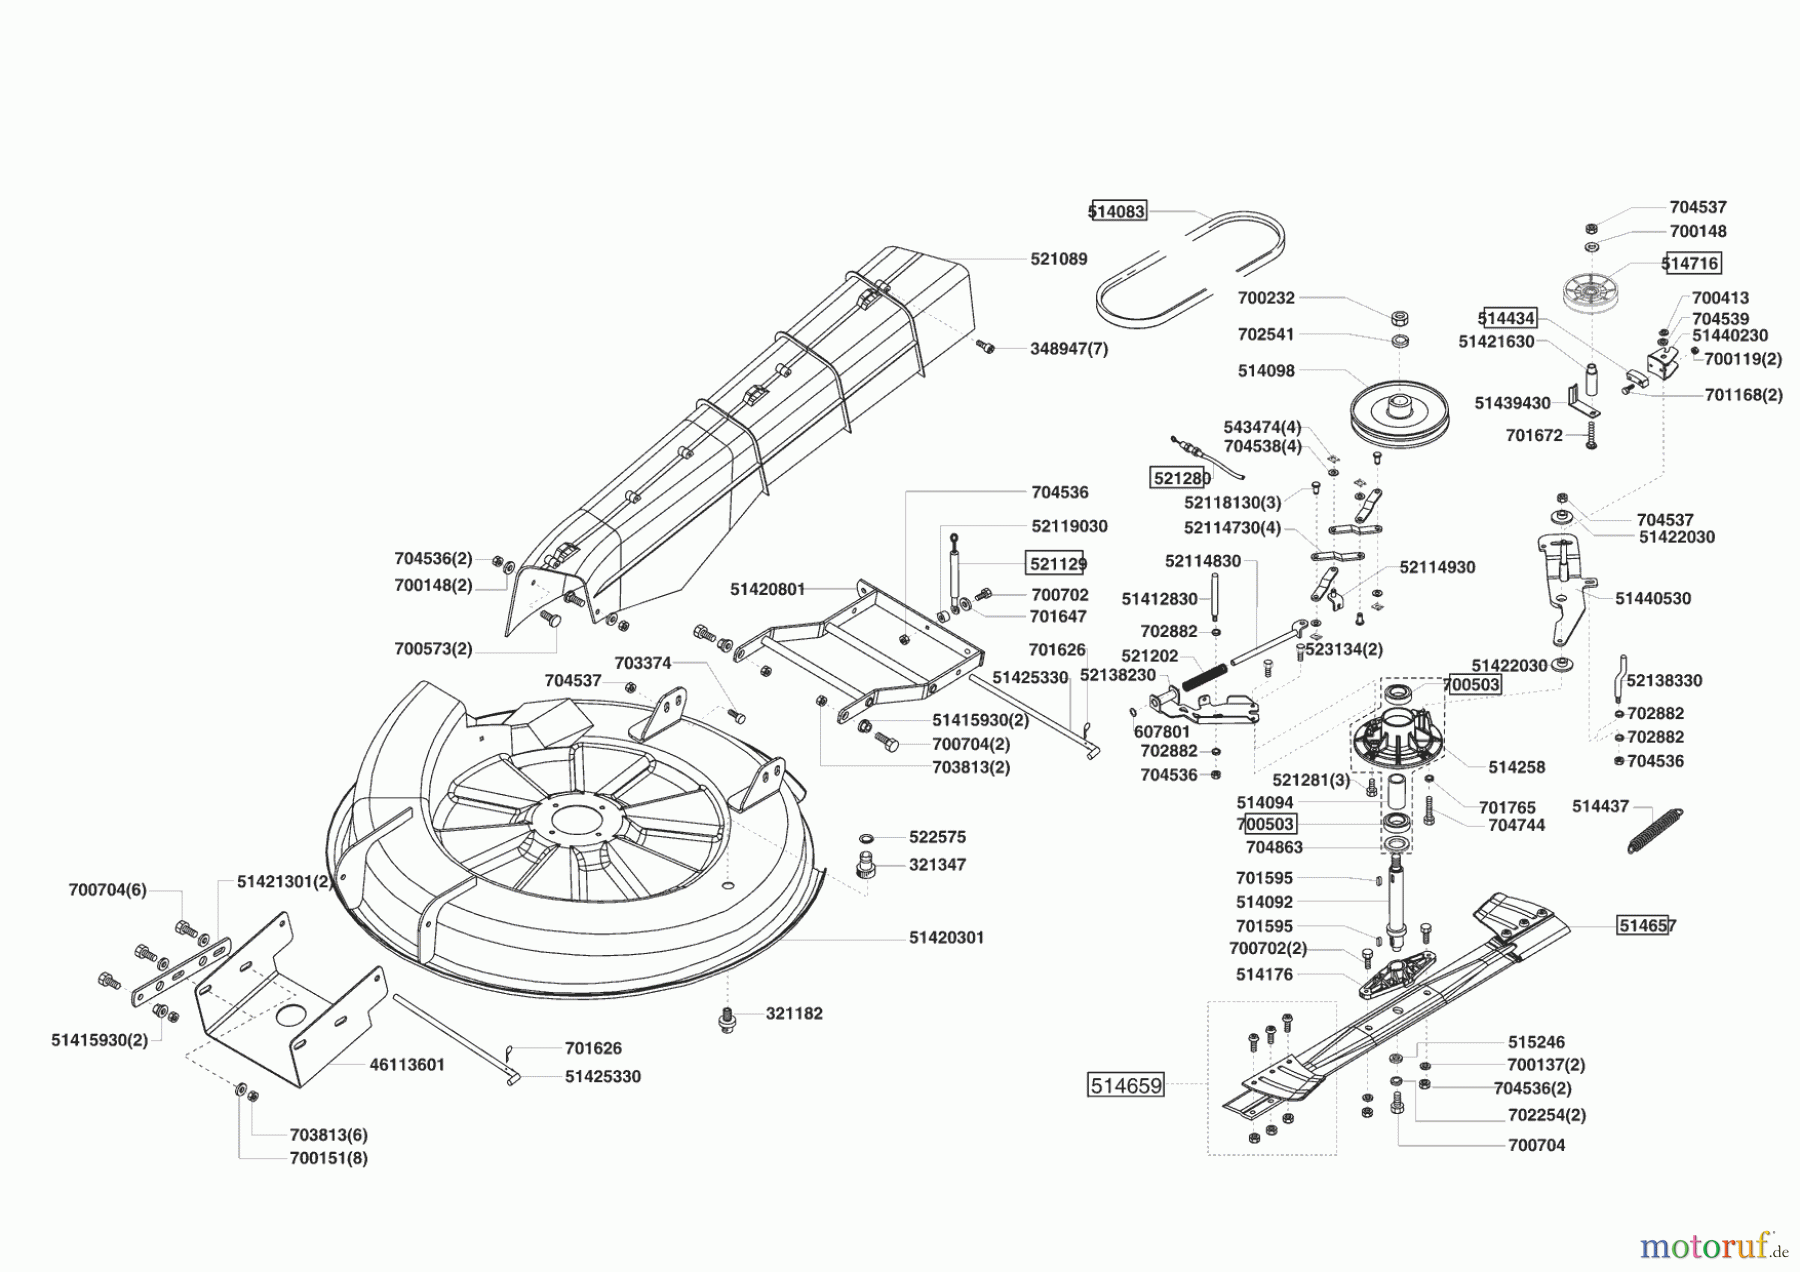  AL-KO Gartentechnik Rasentraktor T850 Seite 5